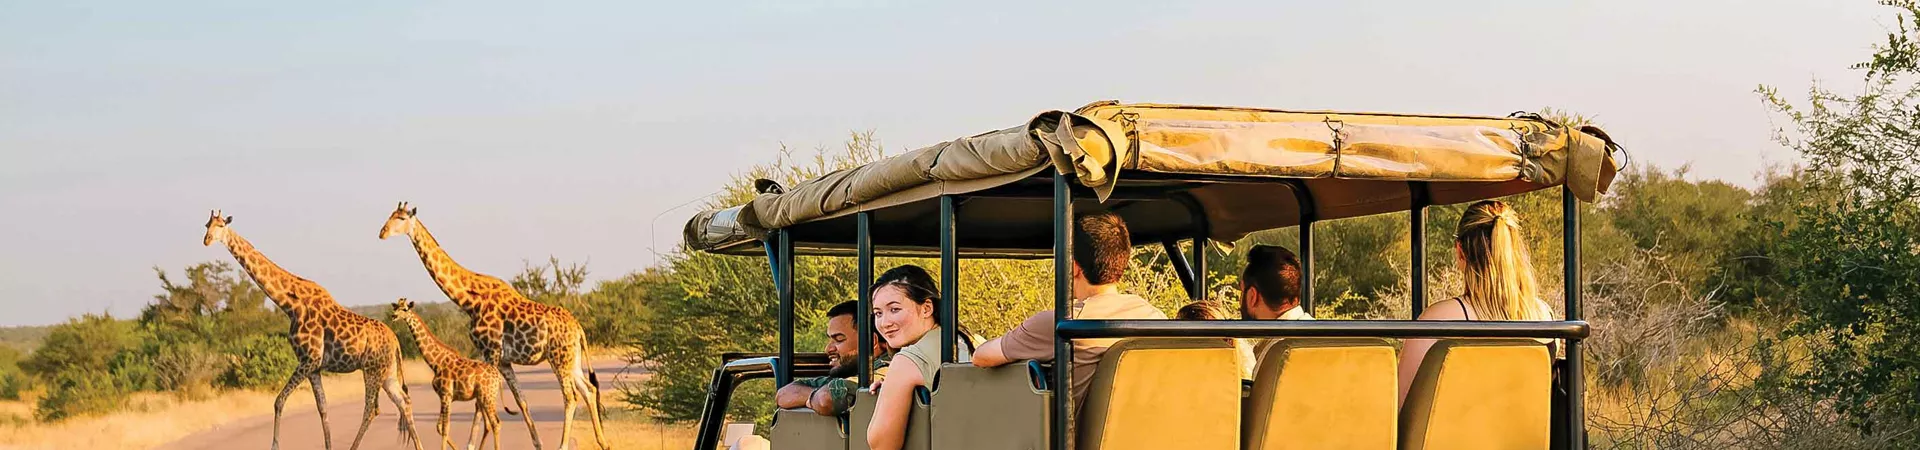 Contiki Safari Vehicle In Front Of Giraffes In Africa